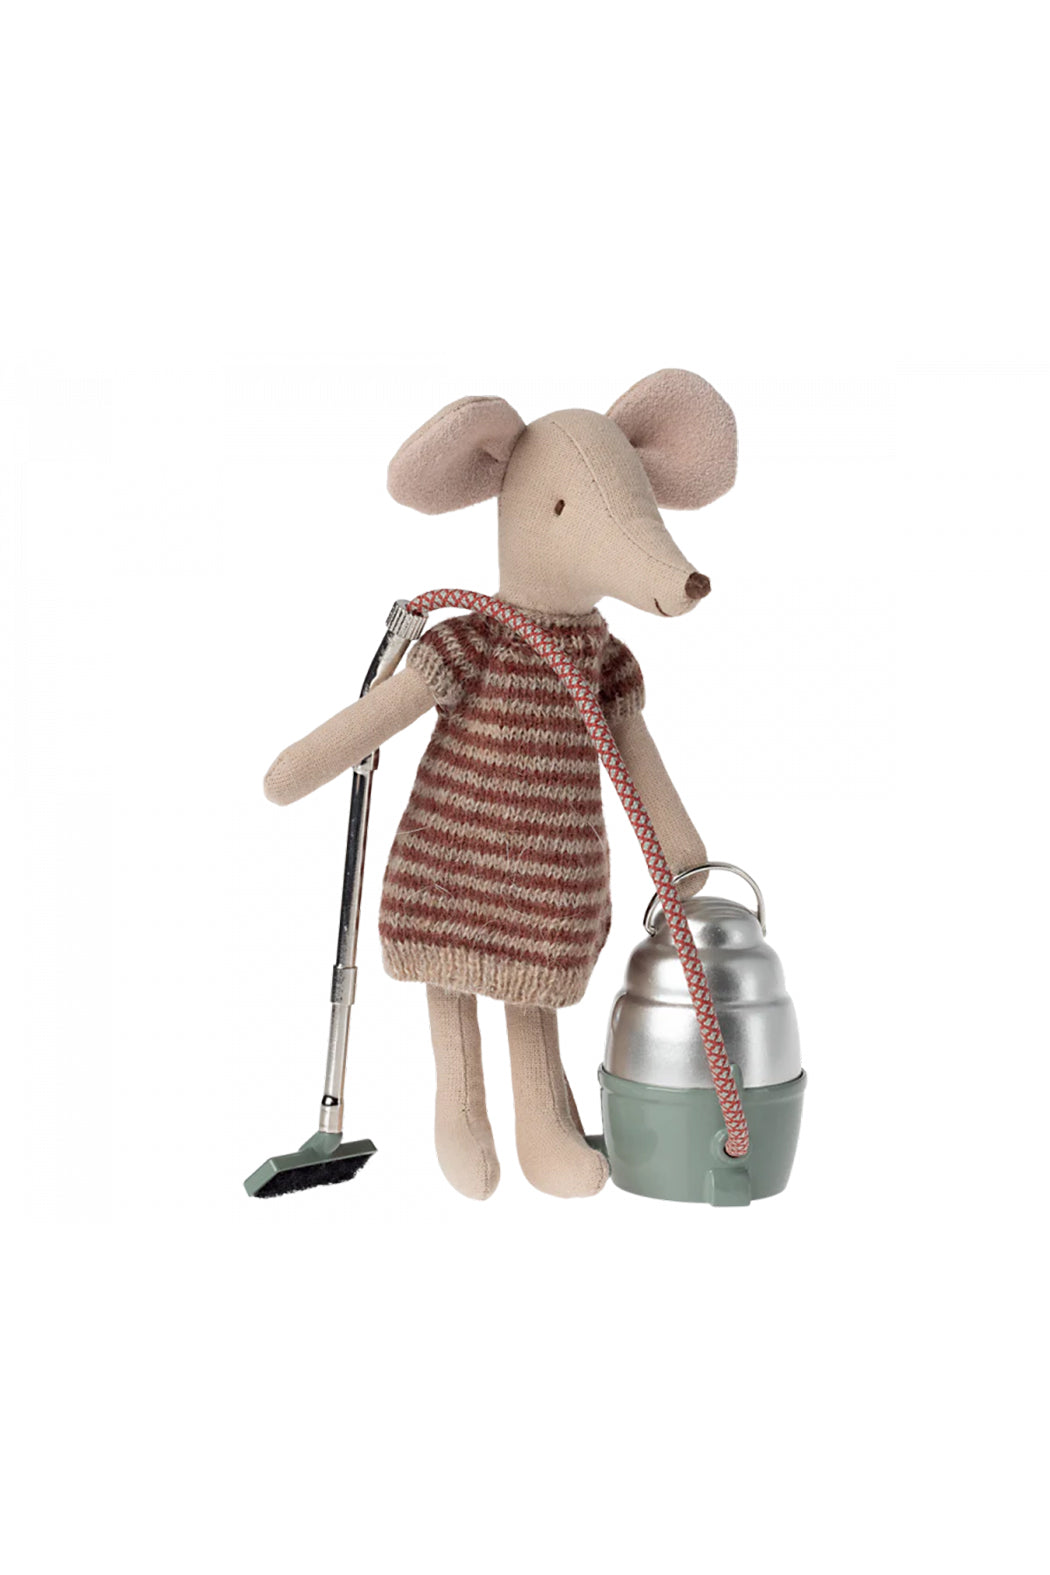 Maileg Mini Hoover Vacuum Cleaner - Mouse